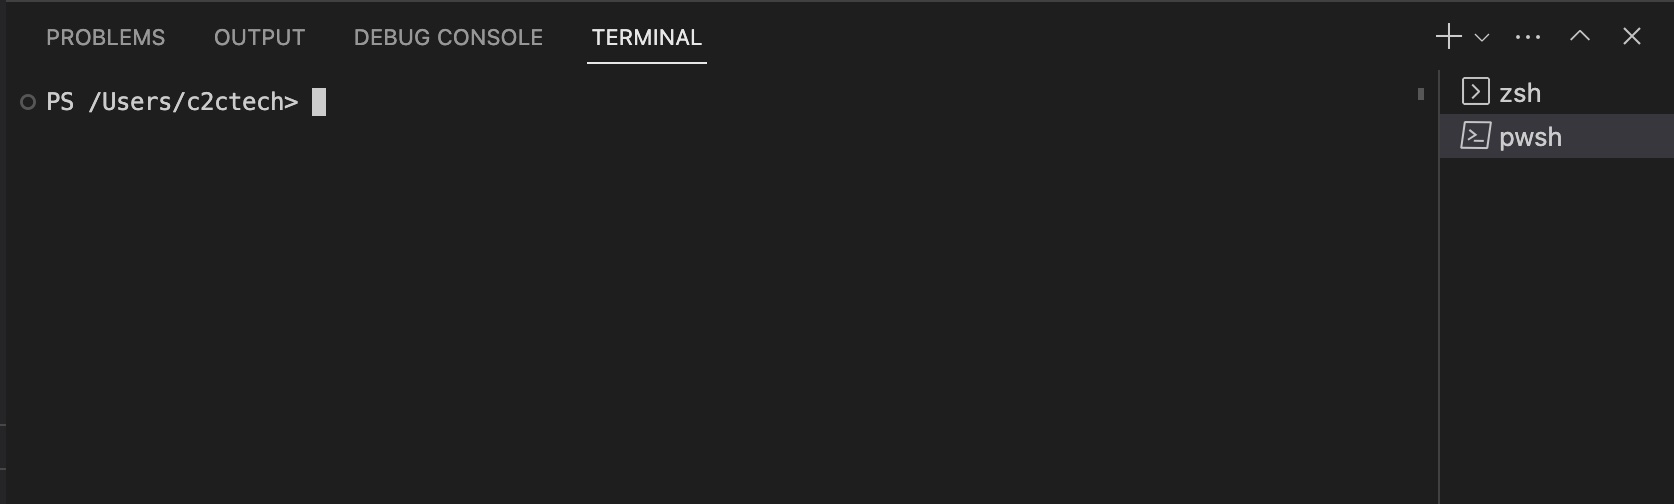 PowerShell Terminal